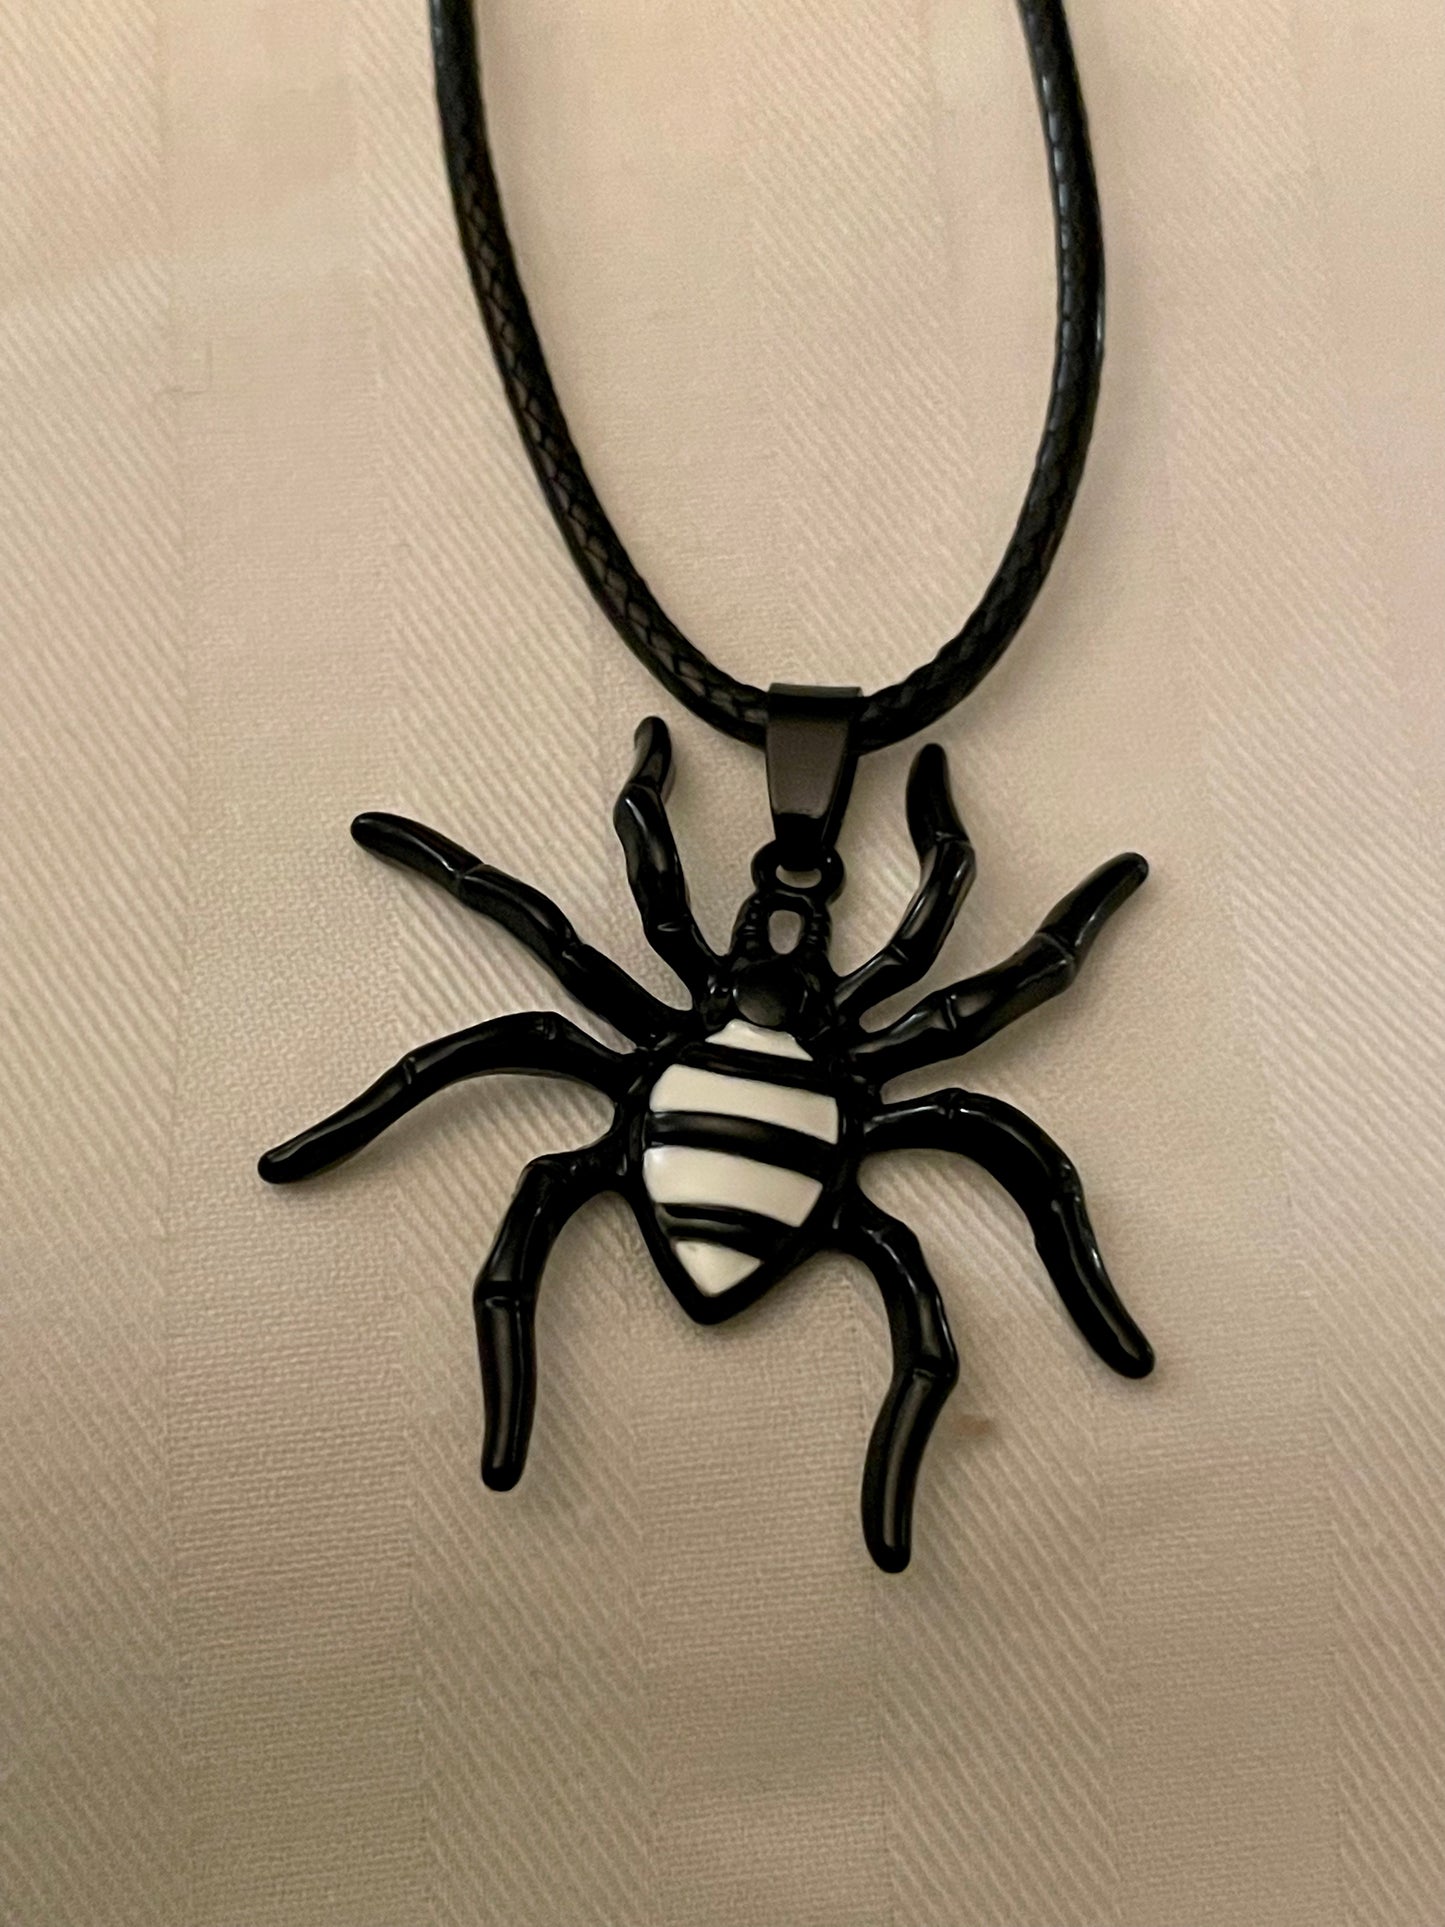 Necklace - Spider Black/White Stripes